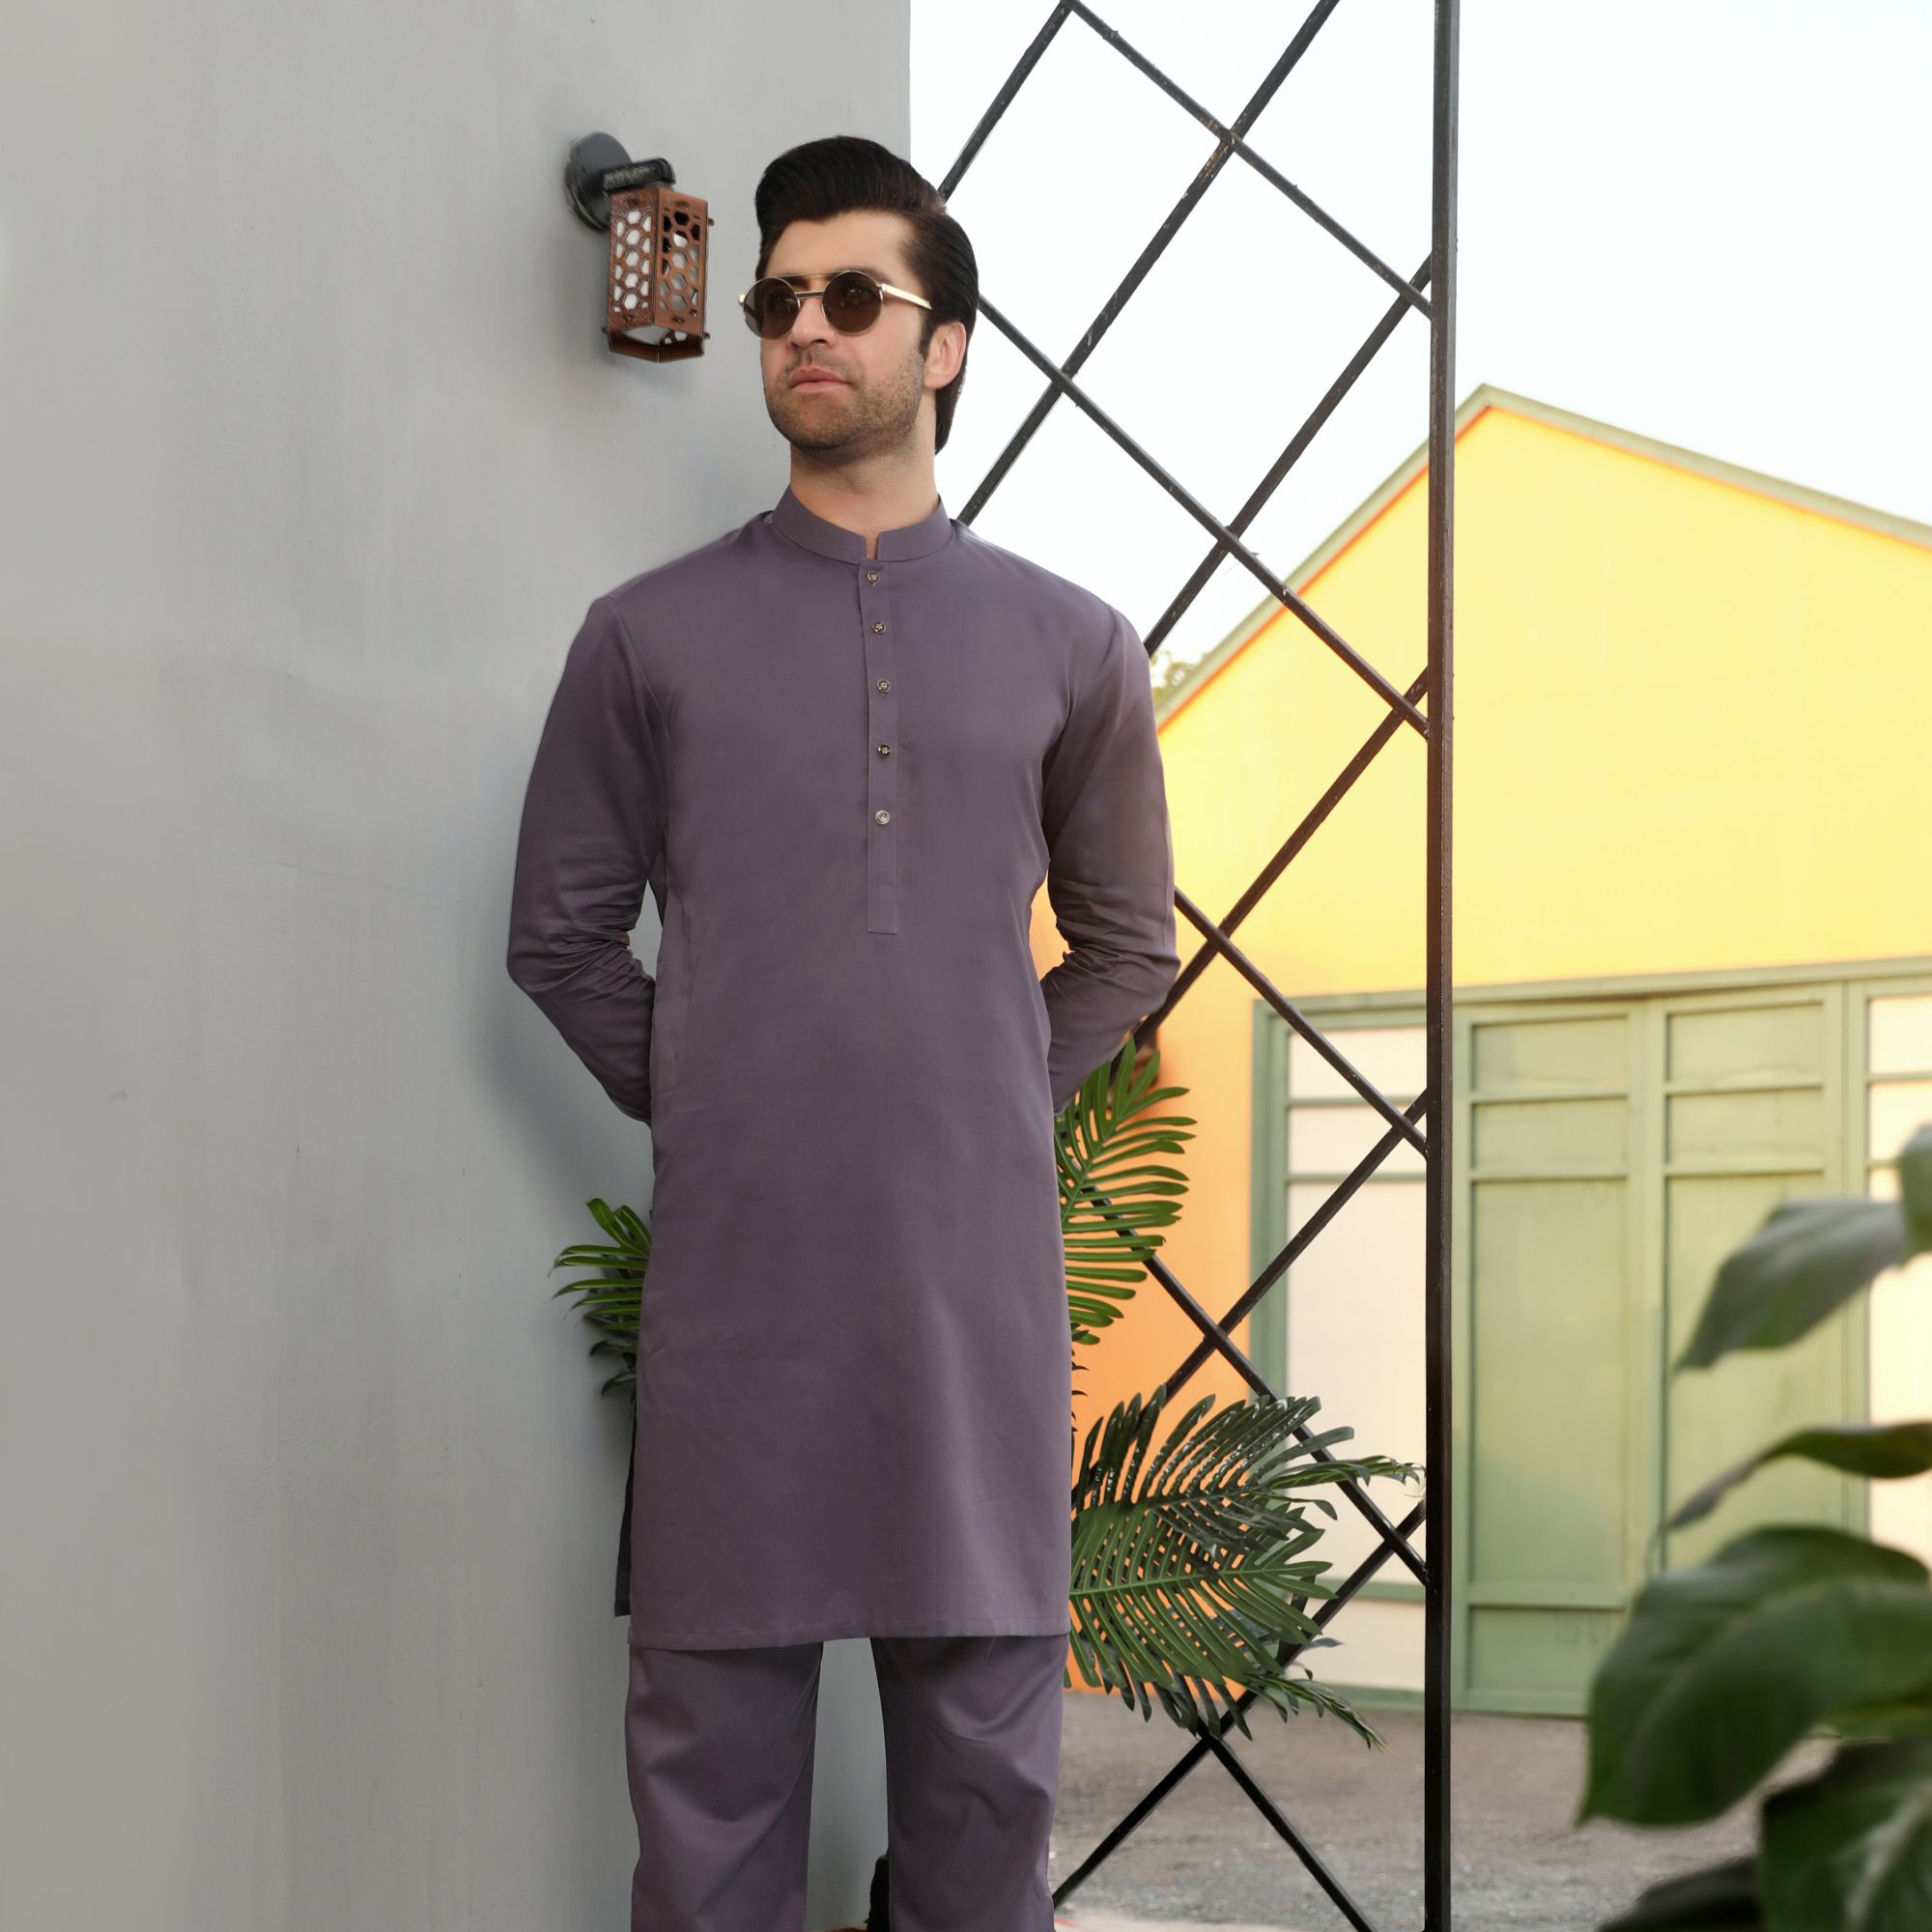 Pakistani men’s clothing brands